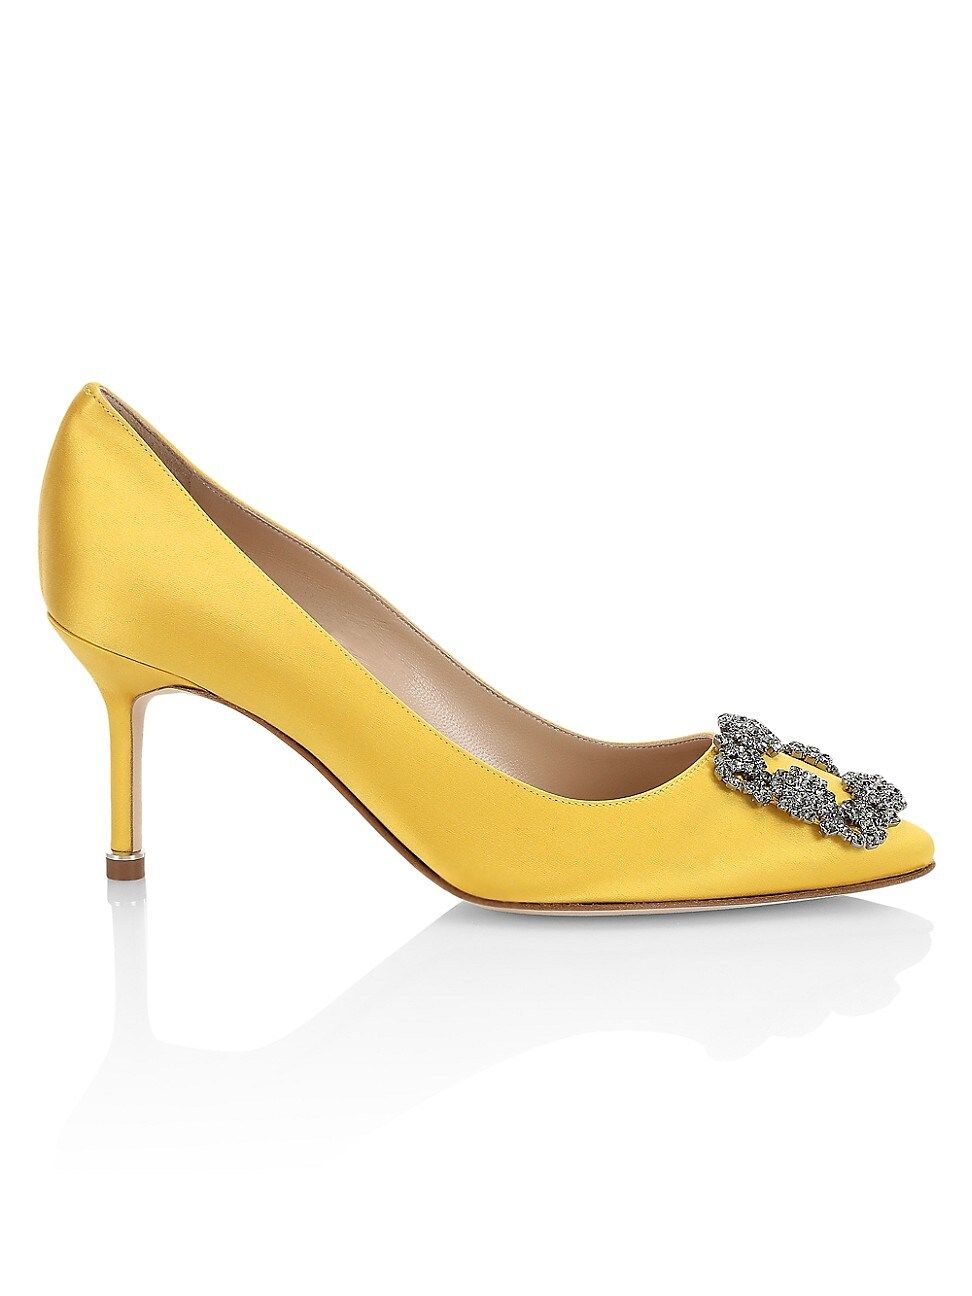 Manolo Blahnik Women's Hangisi 70 Embellished Satin Pumps - Bright Yellow - Size 8 | Saks Fifth Avenue